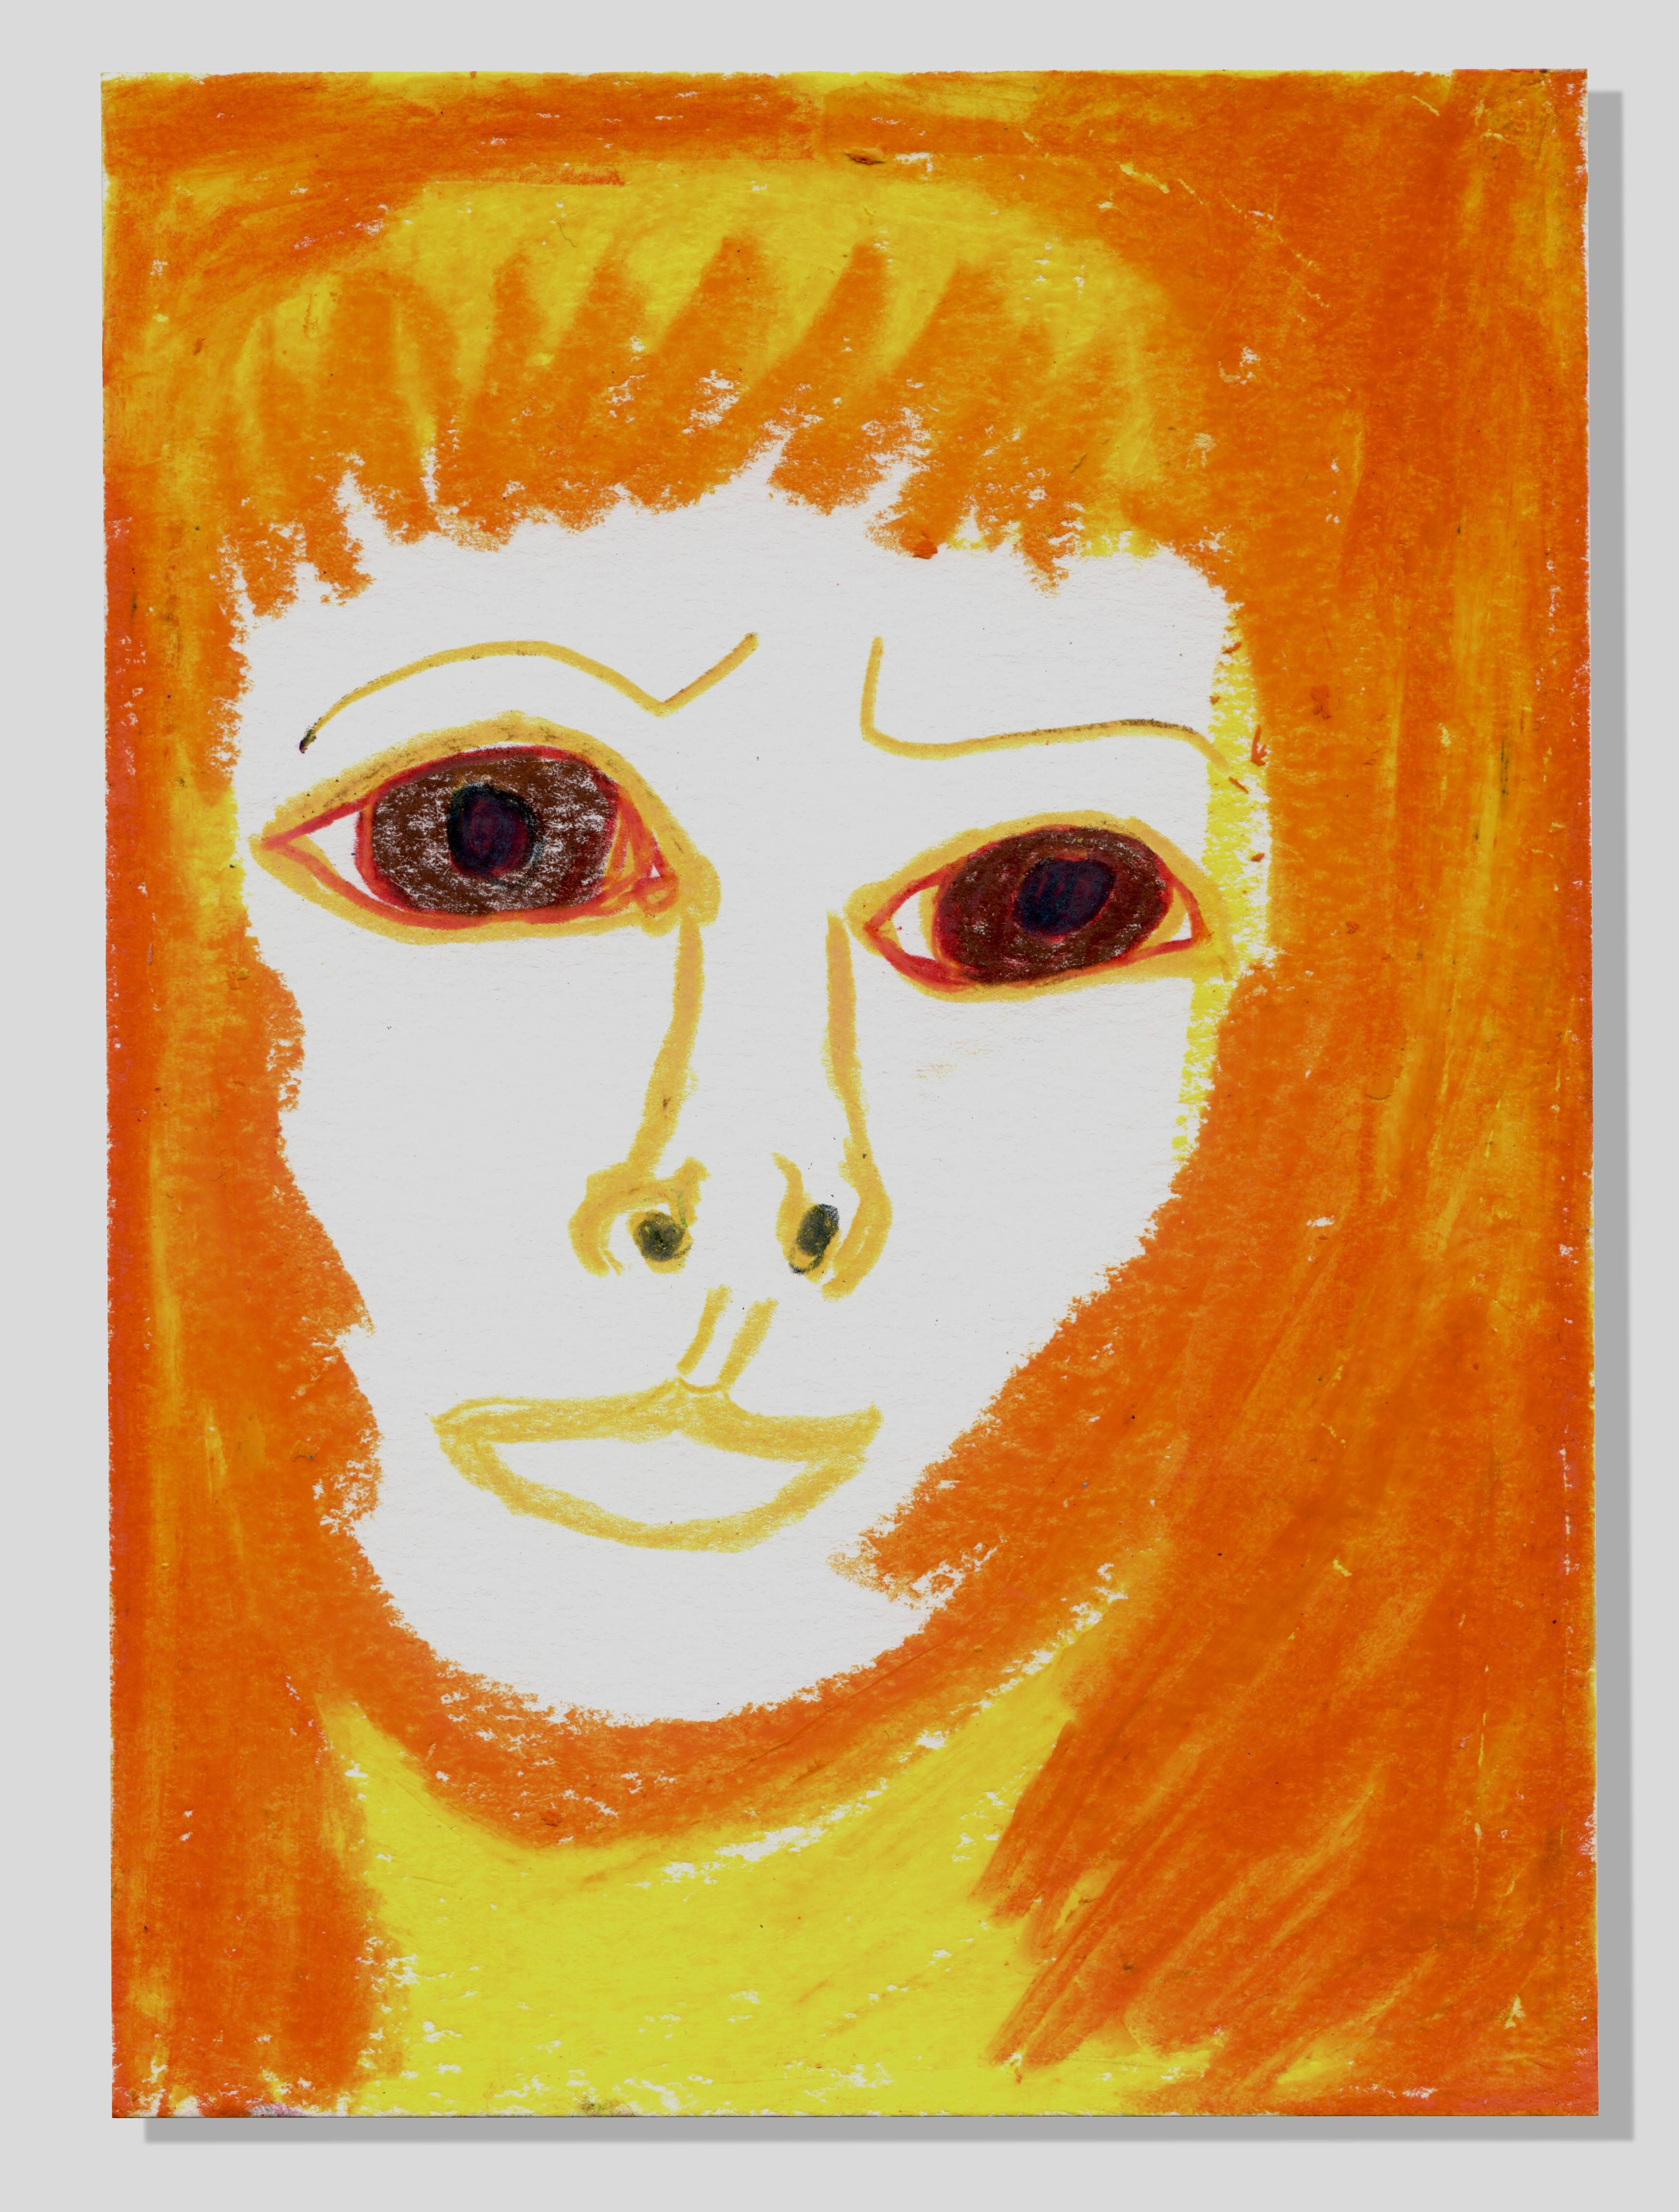 Dulphe Pinheiro Machado Abstract Drawing – Gesicht in Orange